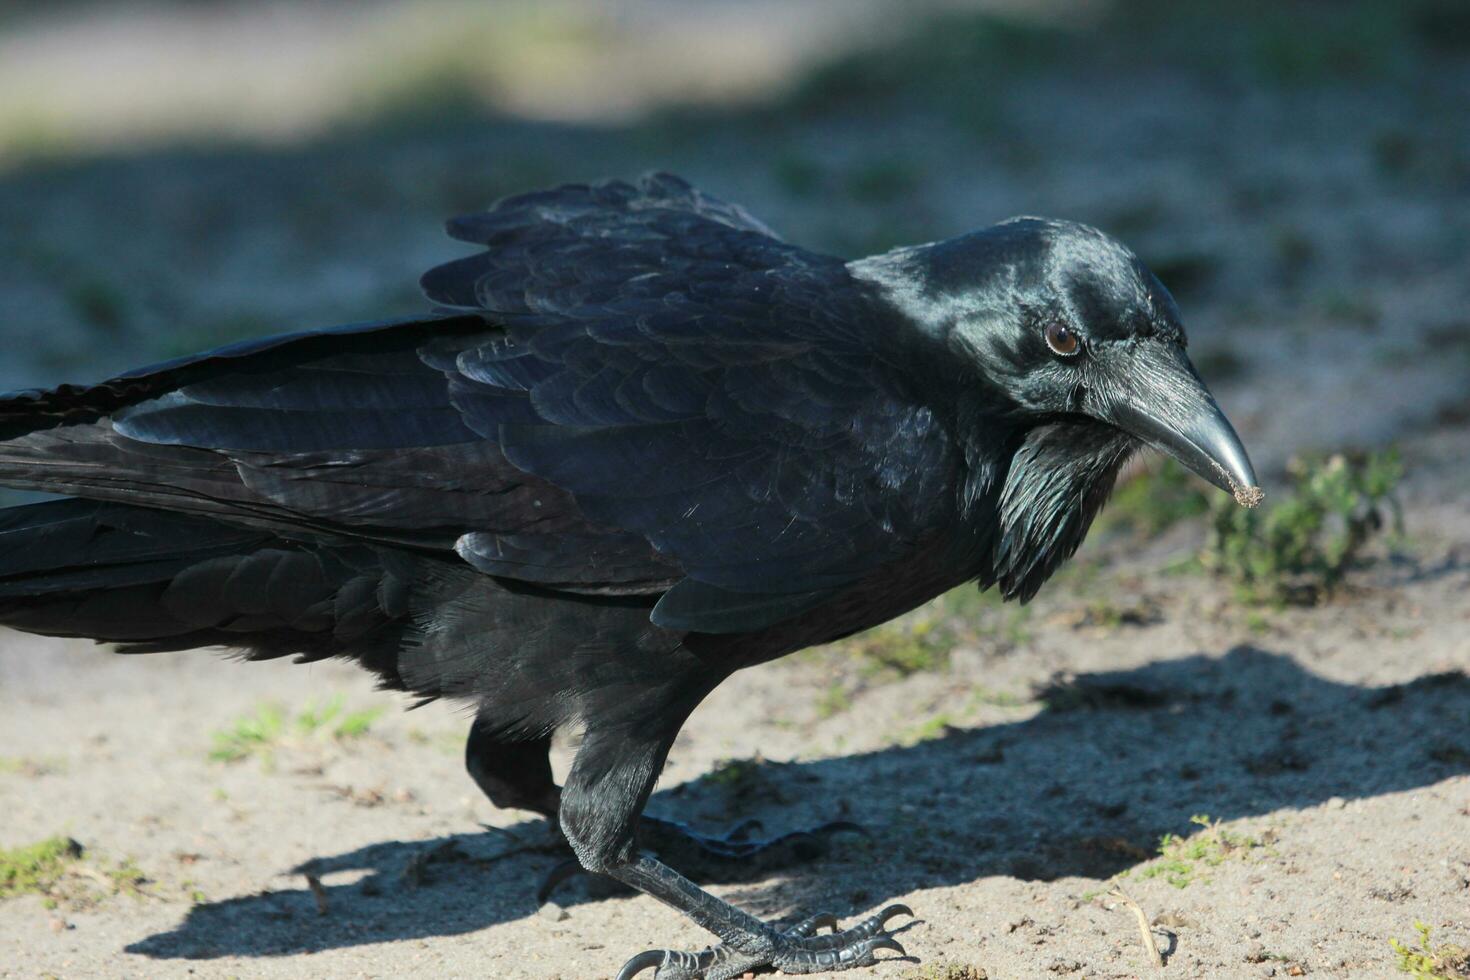 australien corbeau dans Australie photo